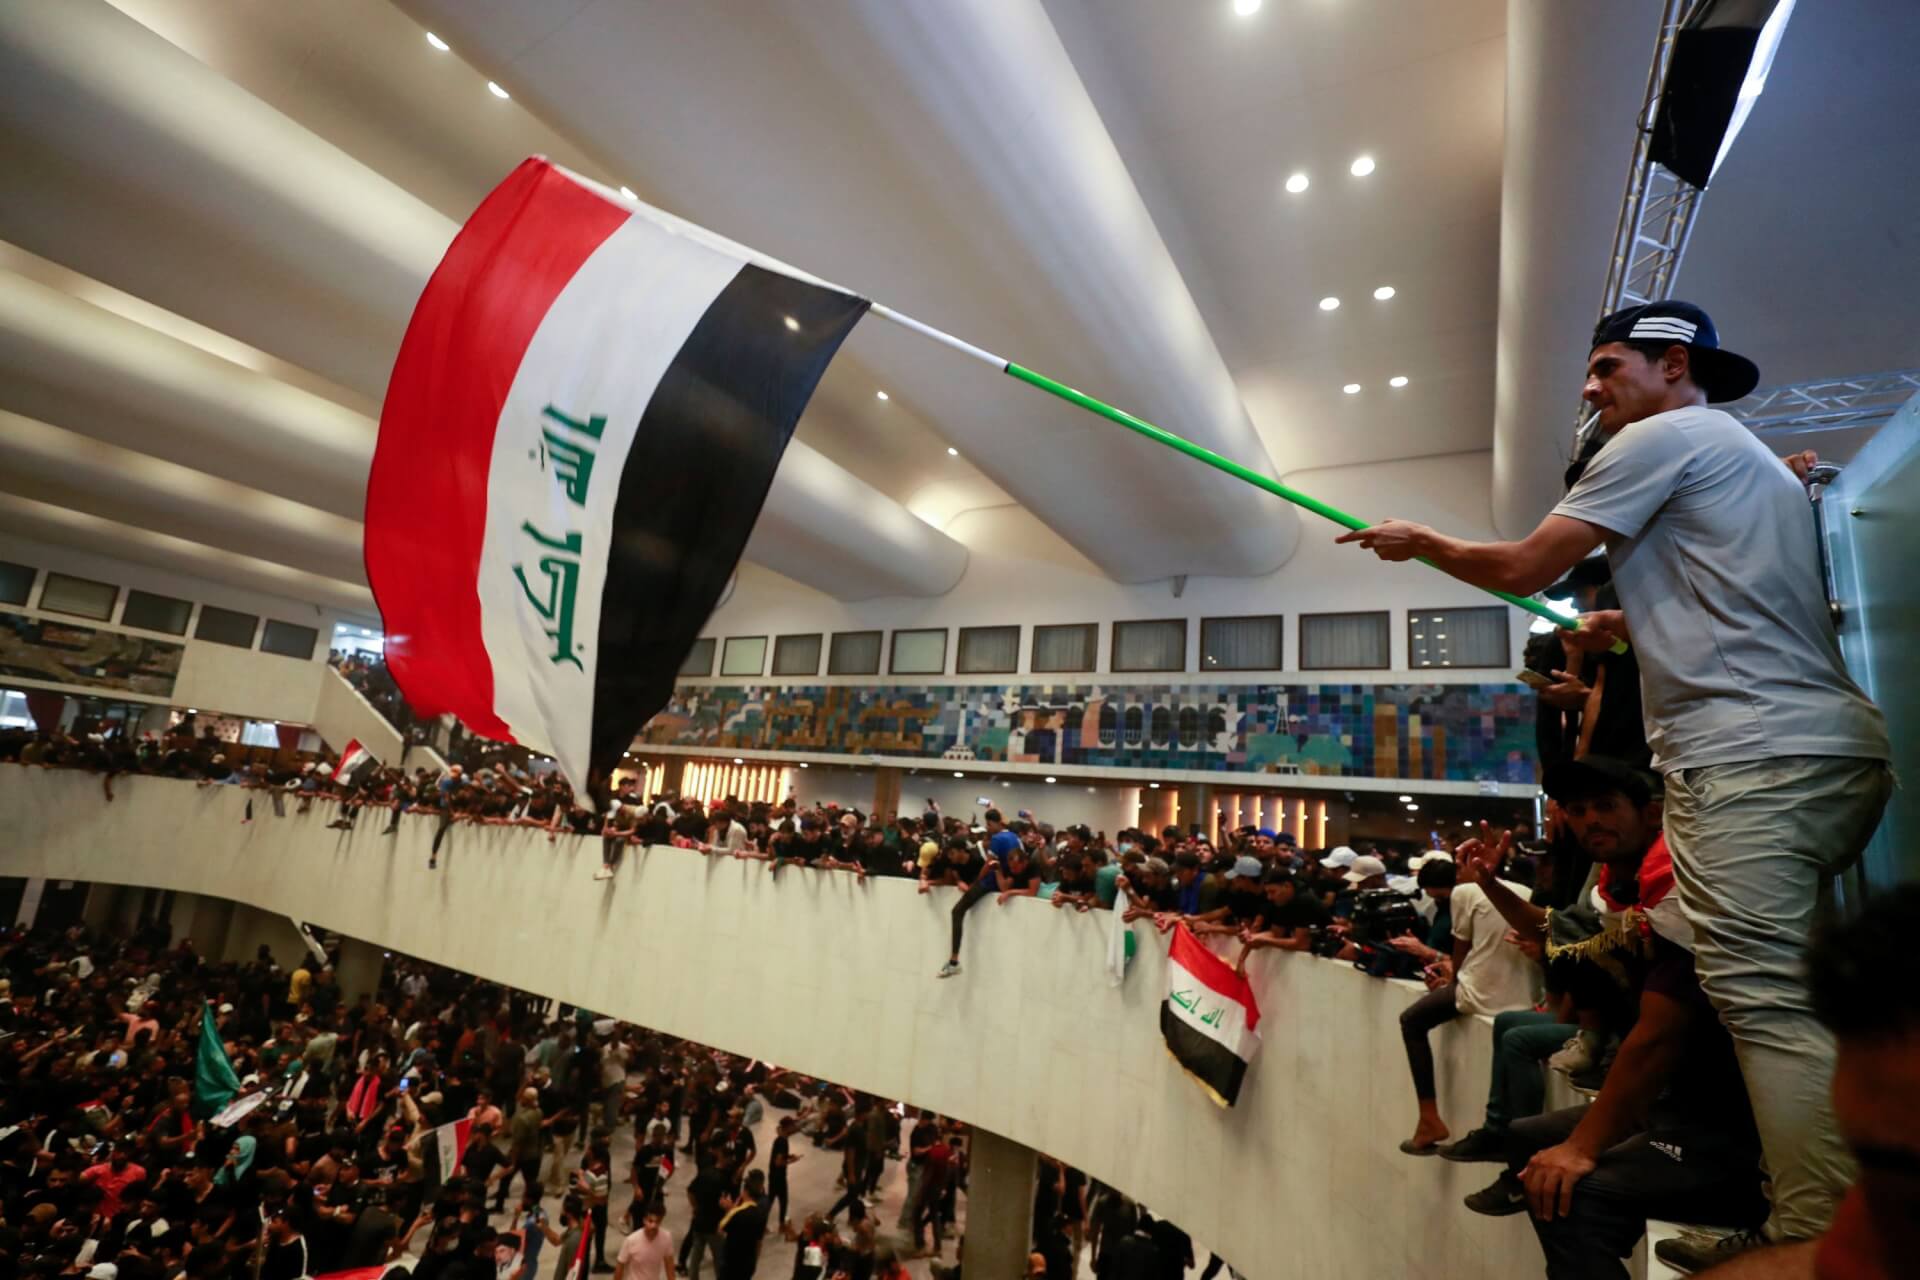 Muqtada Al-Sadr’s Strategy is Pushing Iraq Towards Lawlessness and Instability